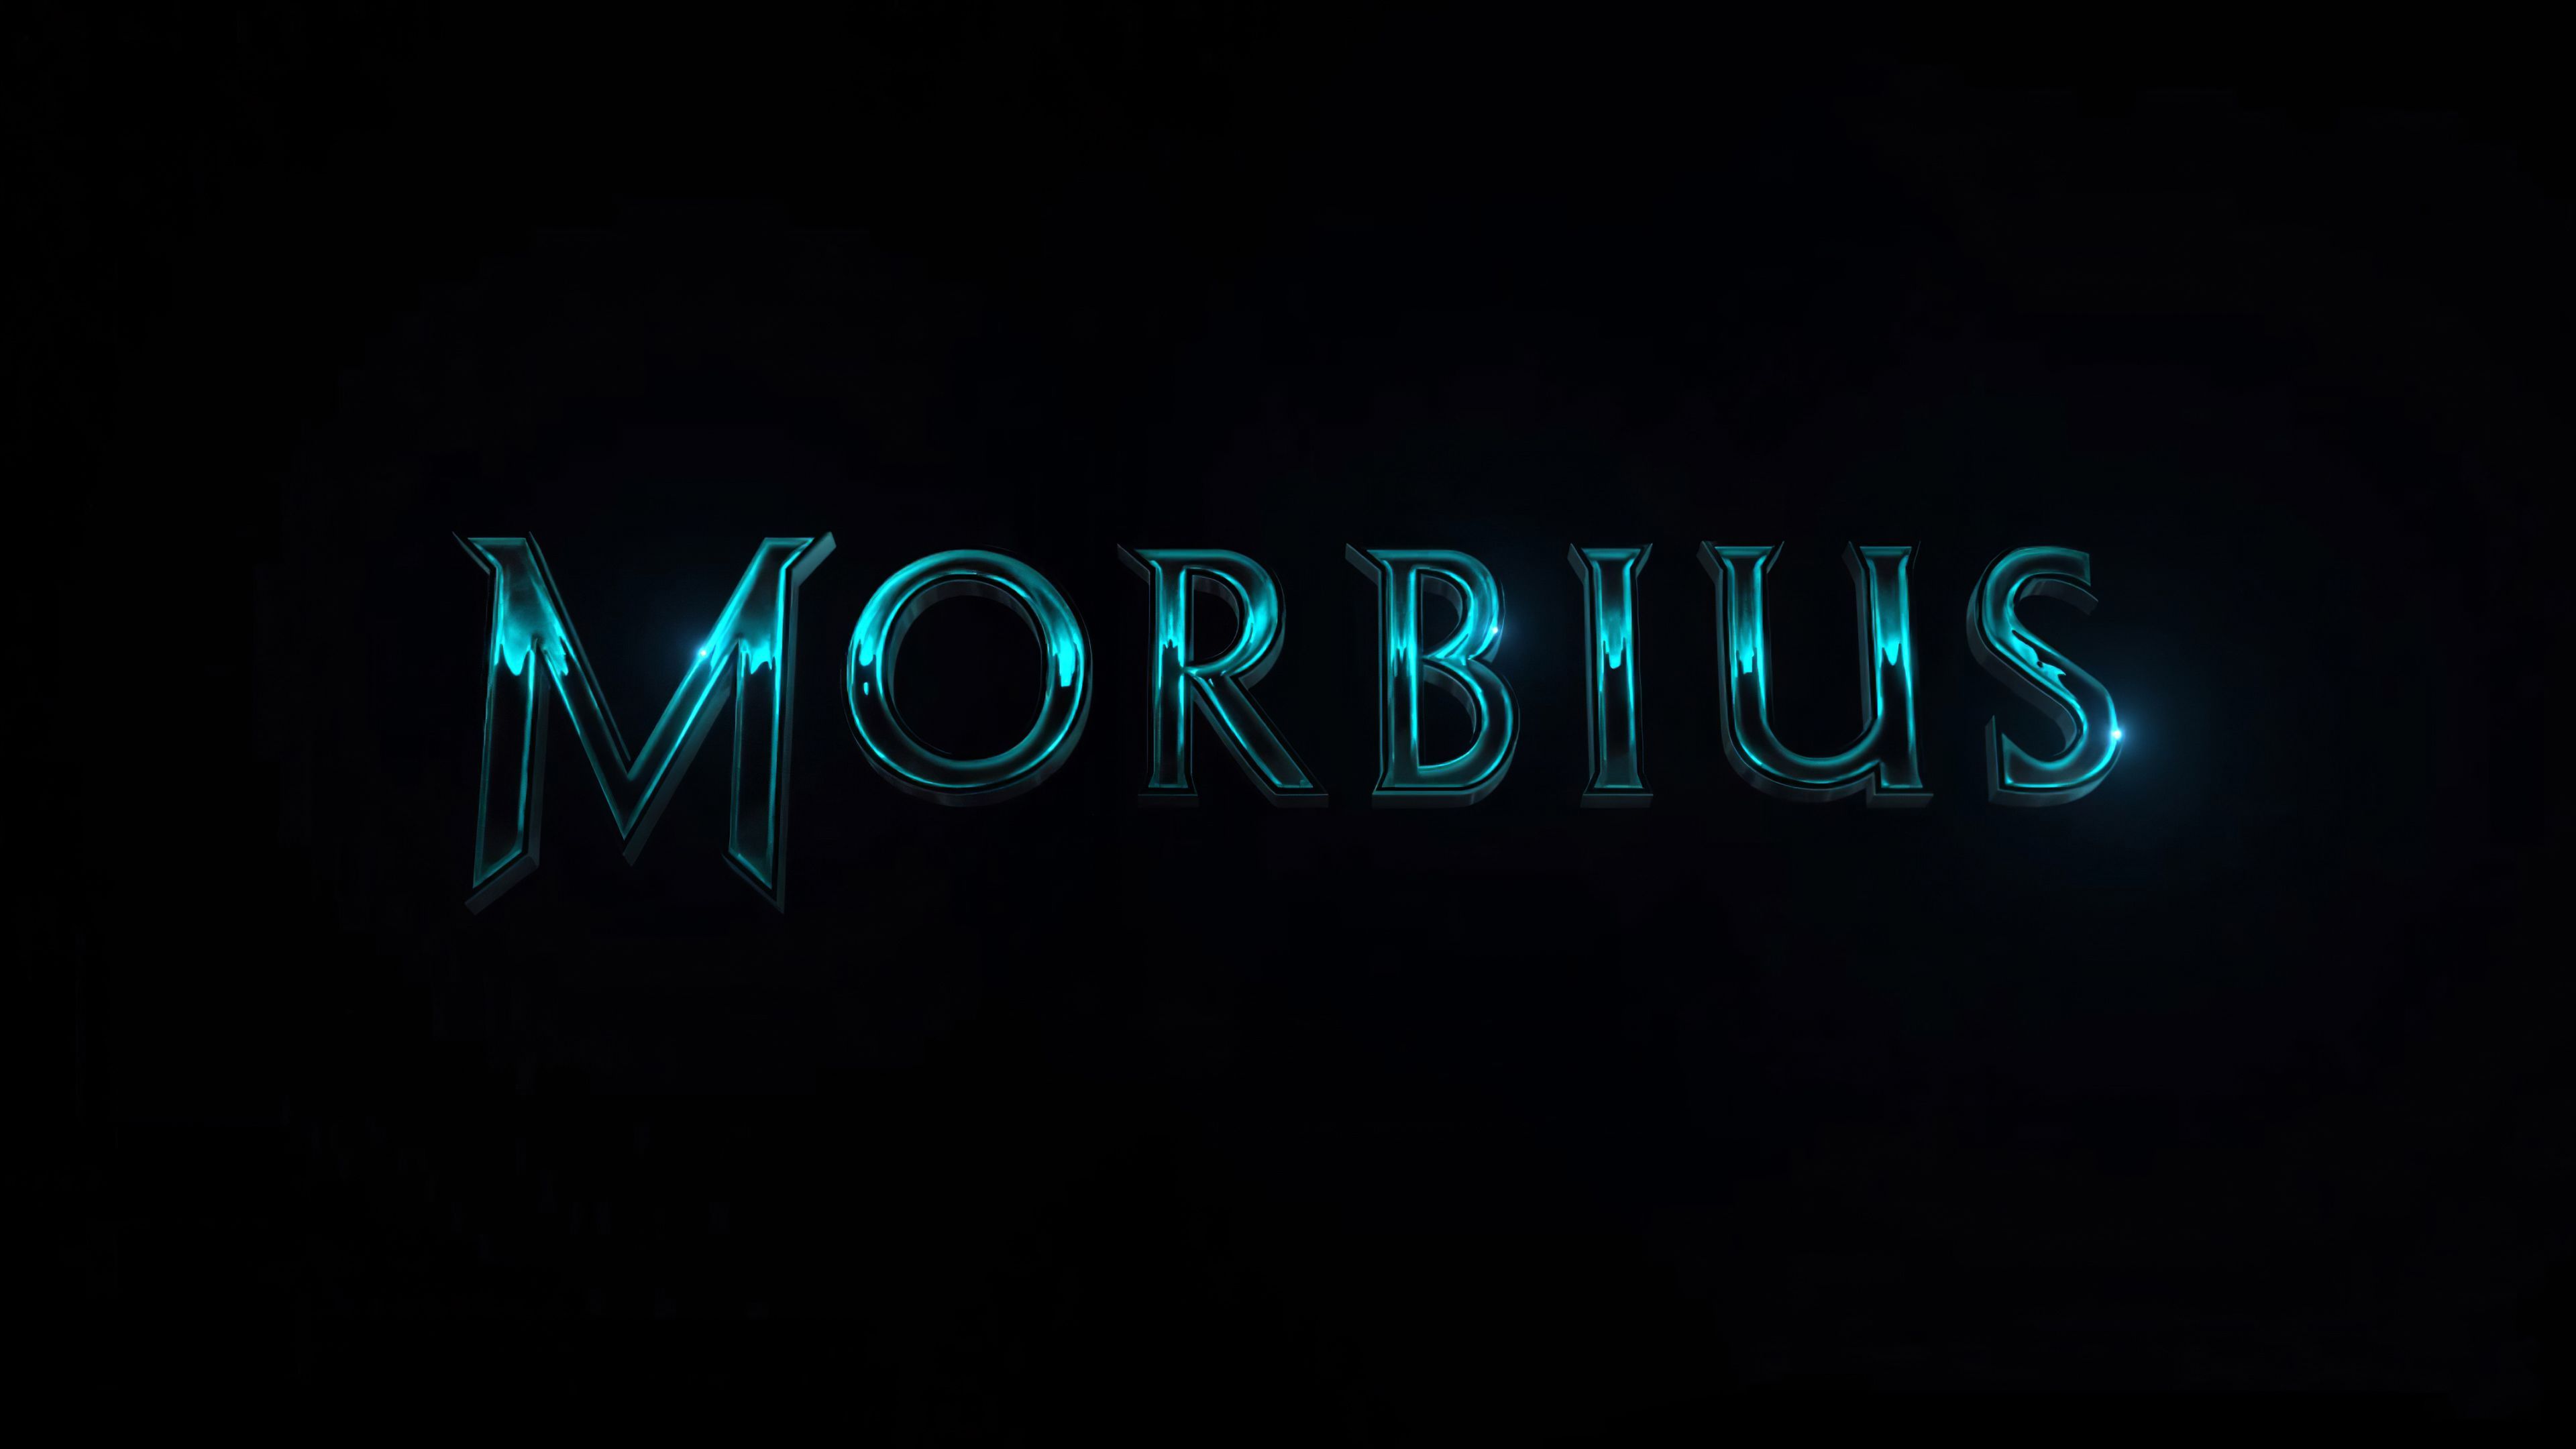 Morbius 2020 Logo Morbius 2020 Logo wallpaper 4k, Morbius 2020 Logo 4k. Jared leto, Marvel, Sony movies